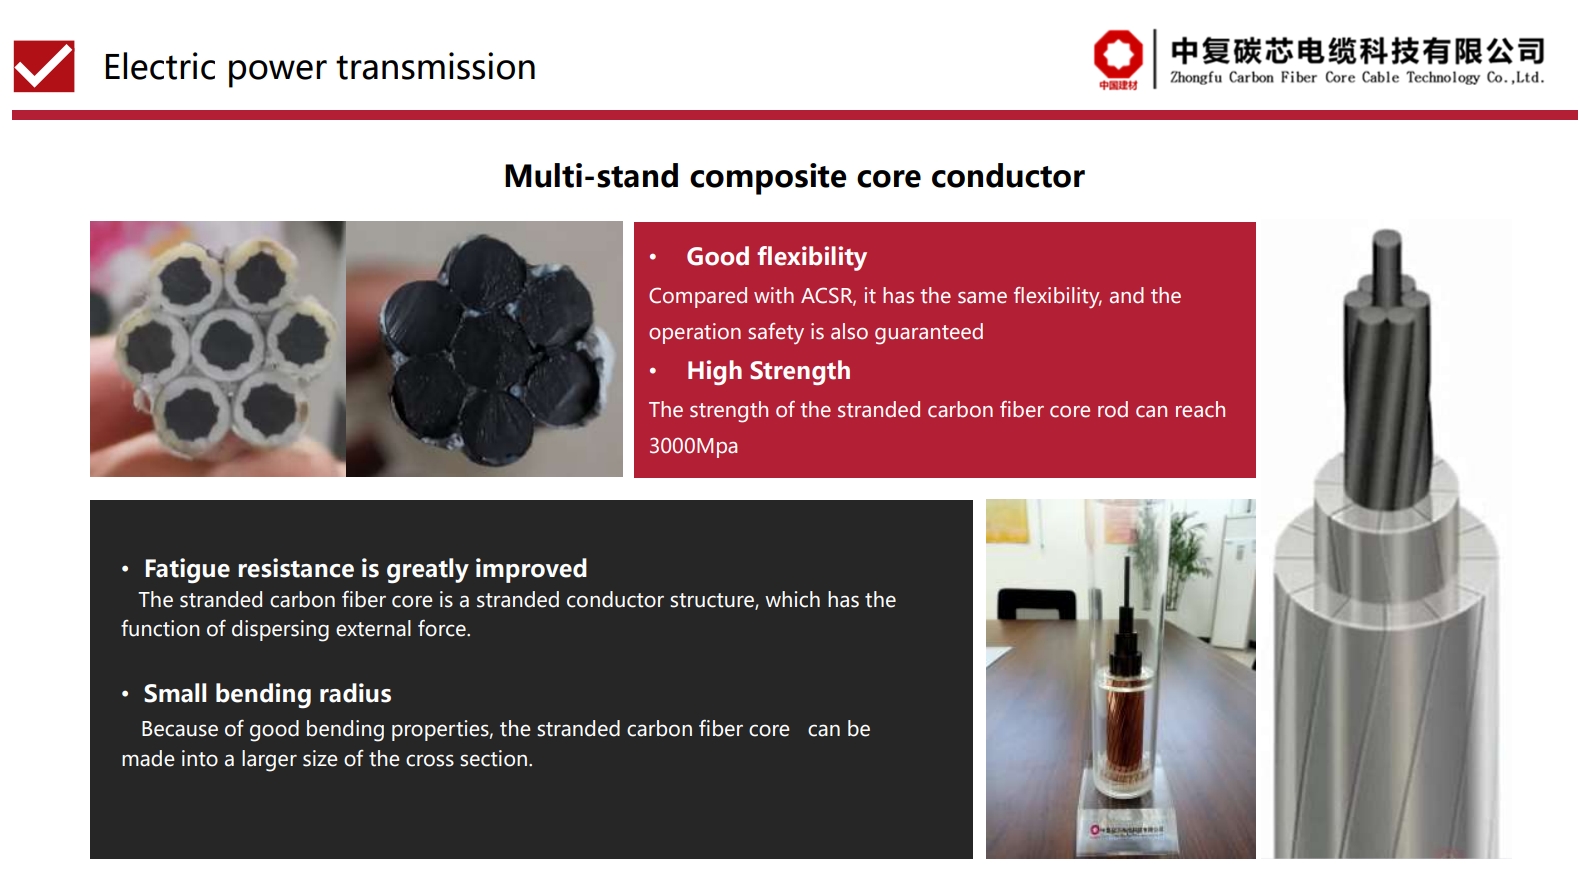 Carbon fiber composite core conductor Optical fiber composite core conductor Multi-stand composite core conductor Optical fiber multi-stand composite core  conductor